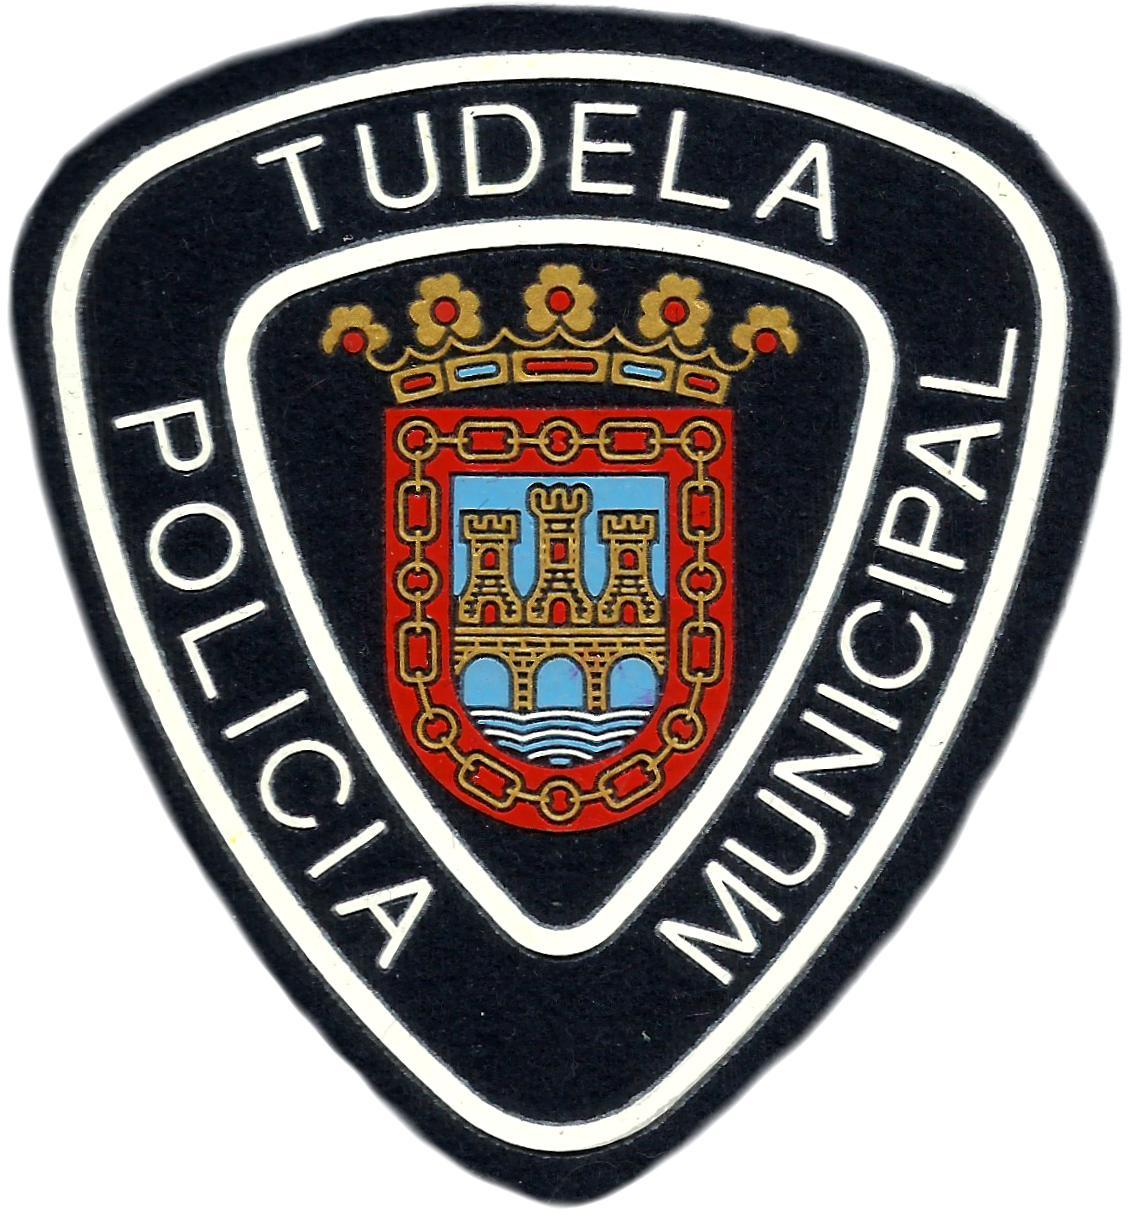 Policía Municipal Tudela Navarra parche insignia emblema distintivo